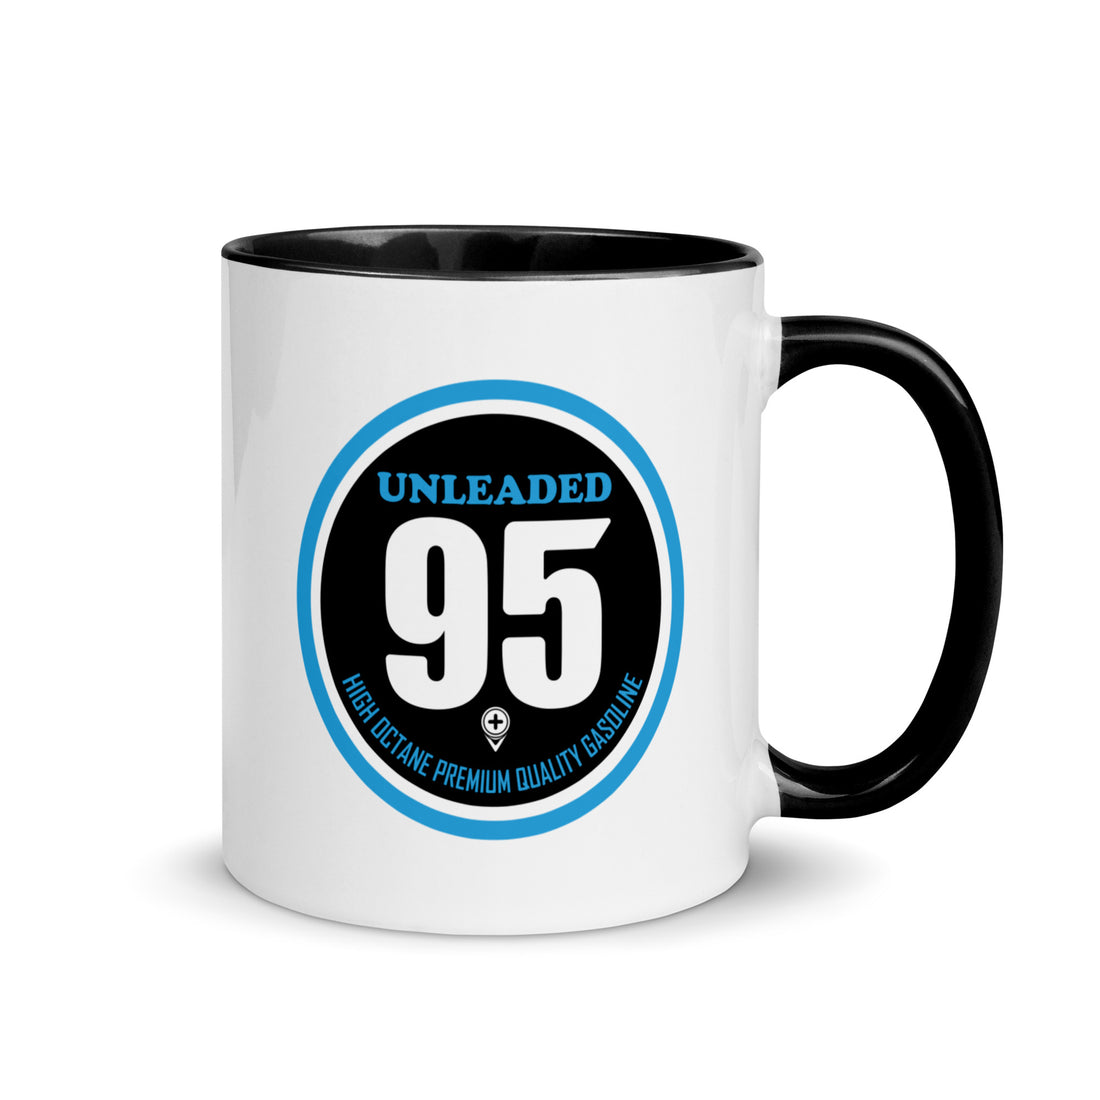 UNLEADED 95 Ceramic Racing Mug